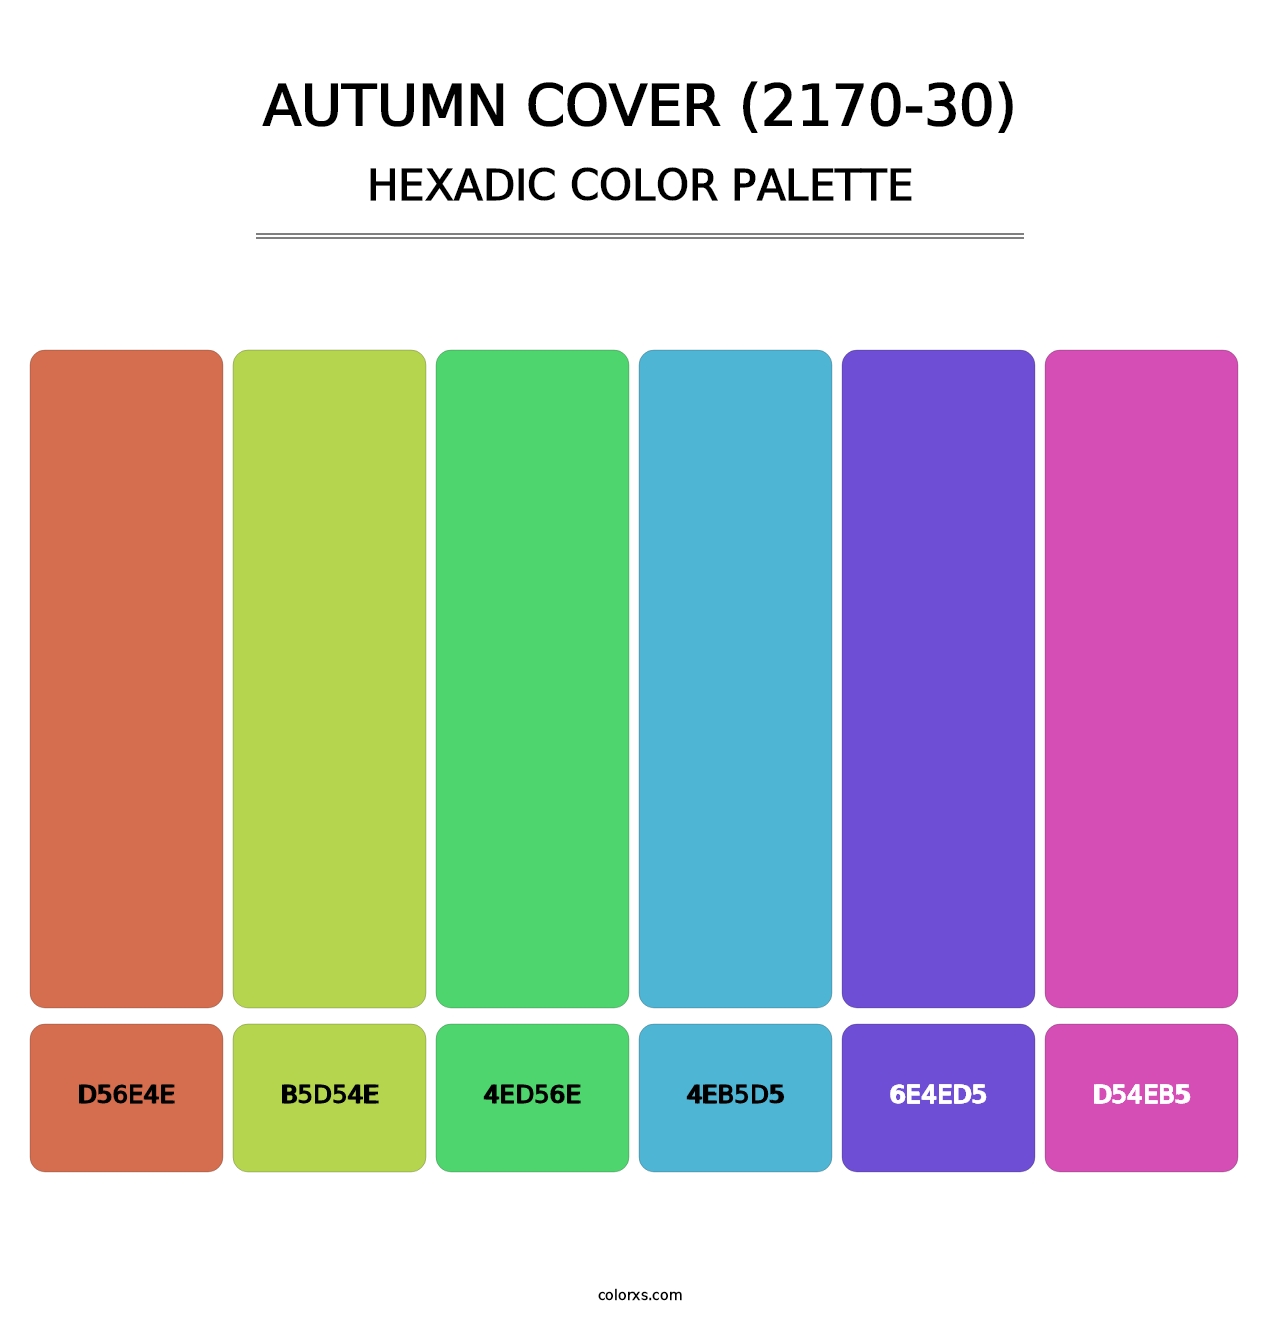 Autumn Cover (2170-30) - Hexadic Color Palette